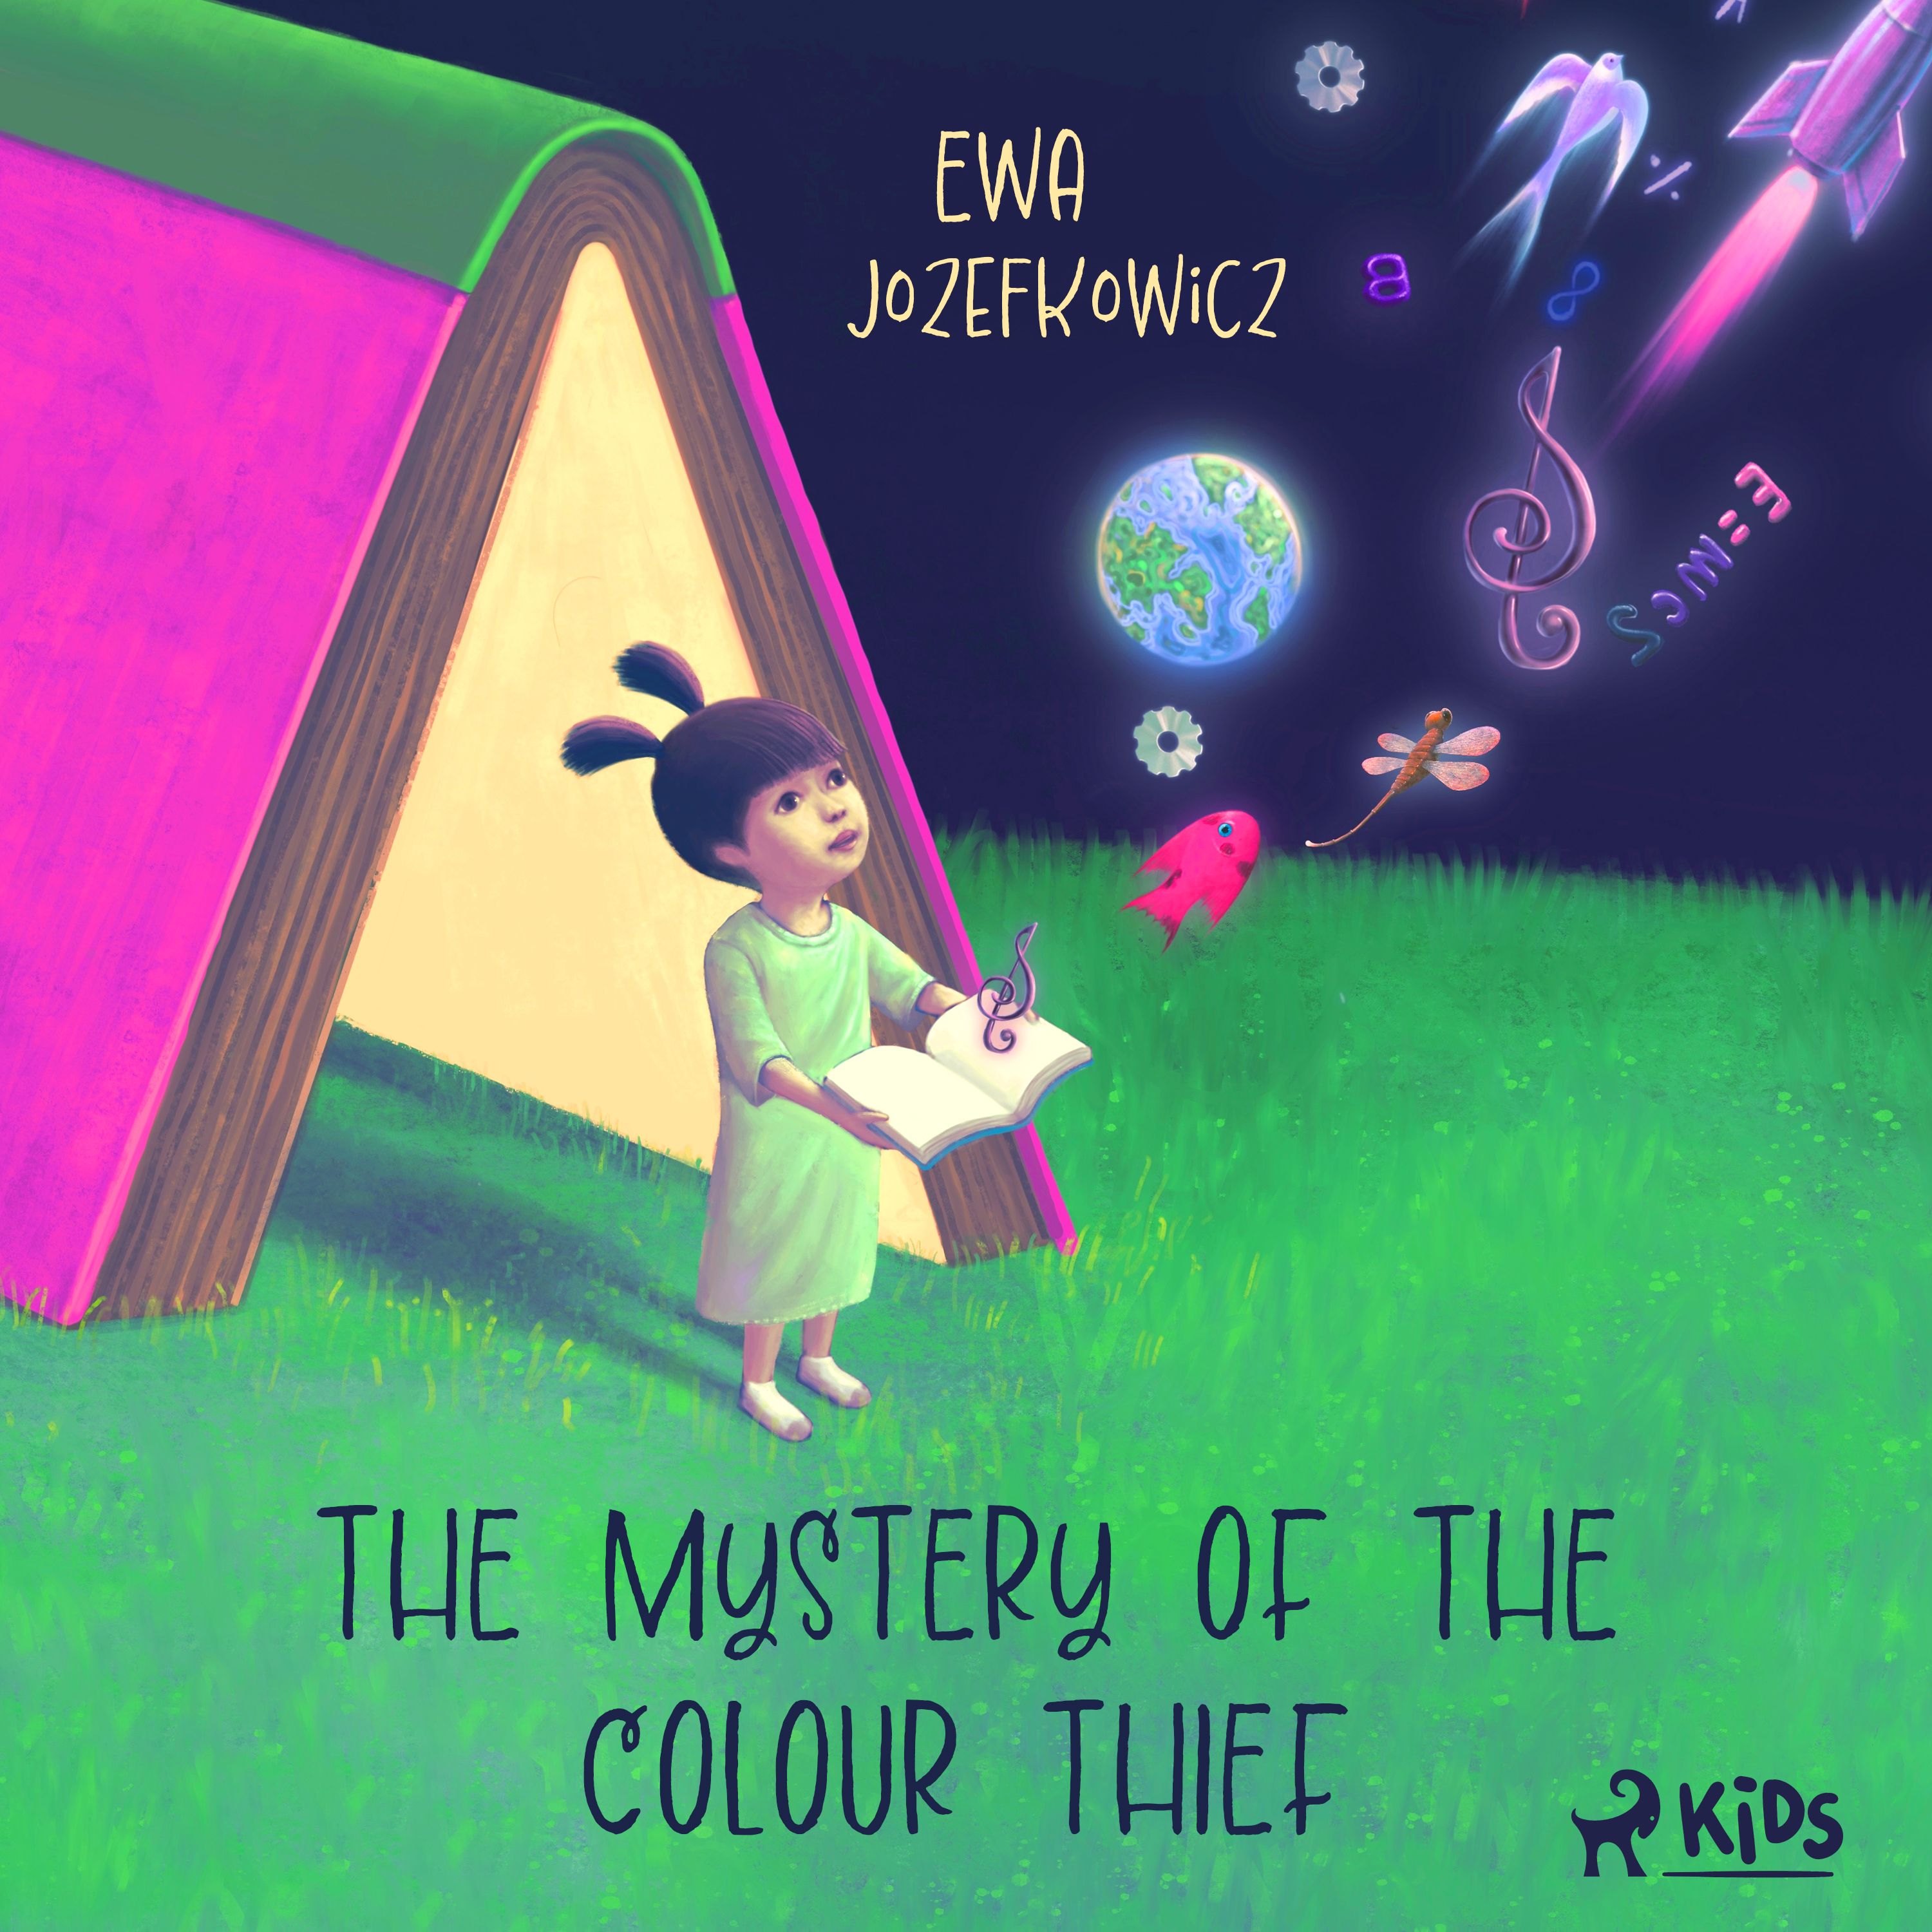 The Mystery of the Colour Thief, ljudbok av Ewa Jozefkowicz